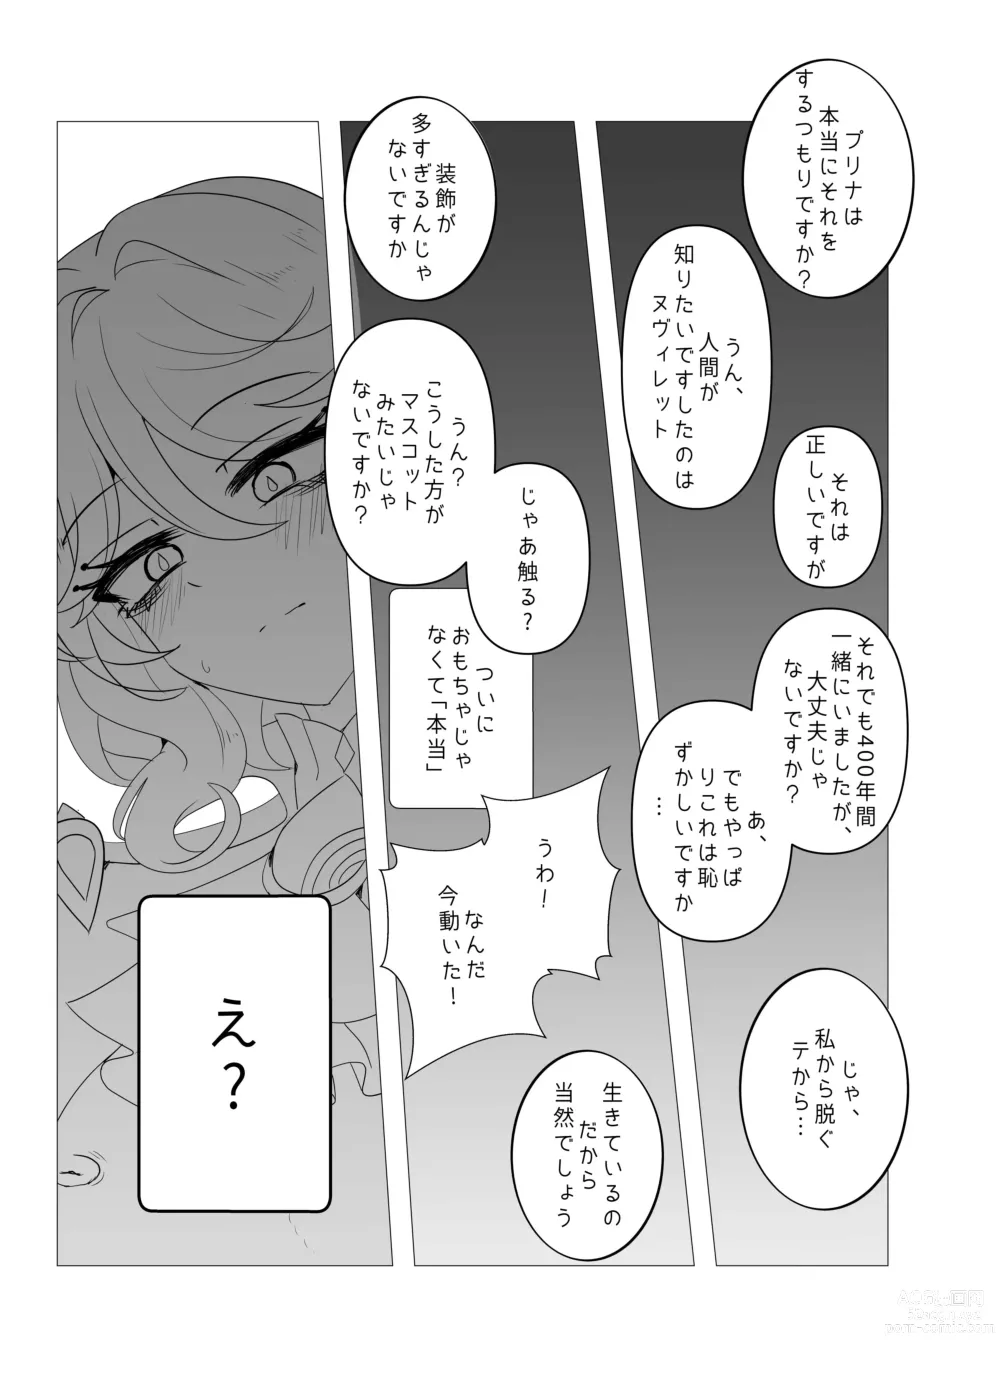 Page 14 of doujinshi Imi no Nai Jikan